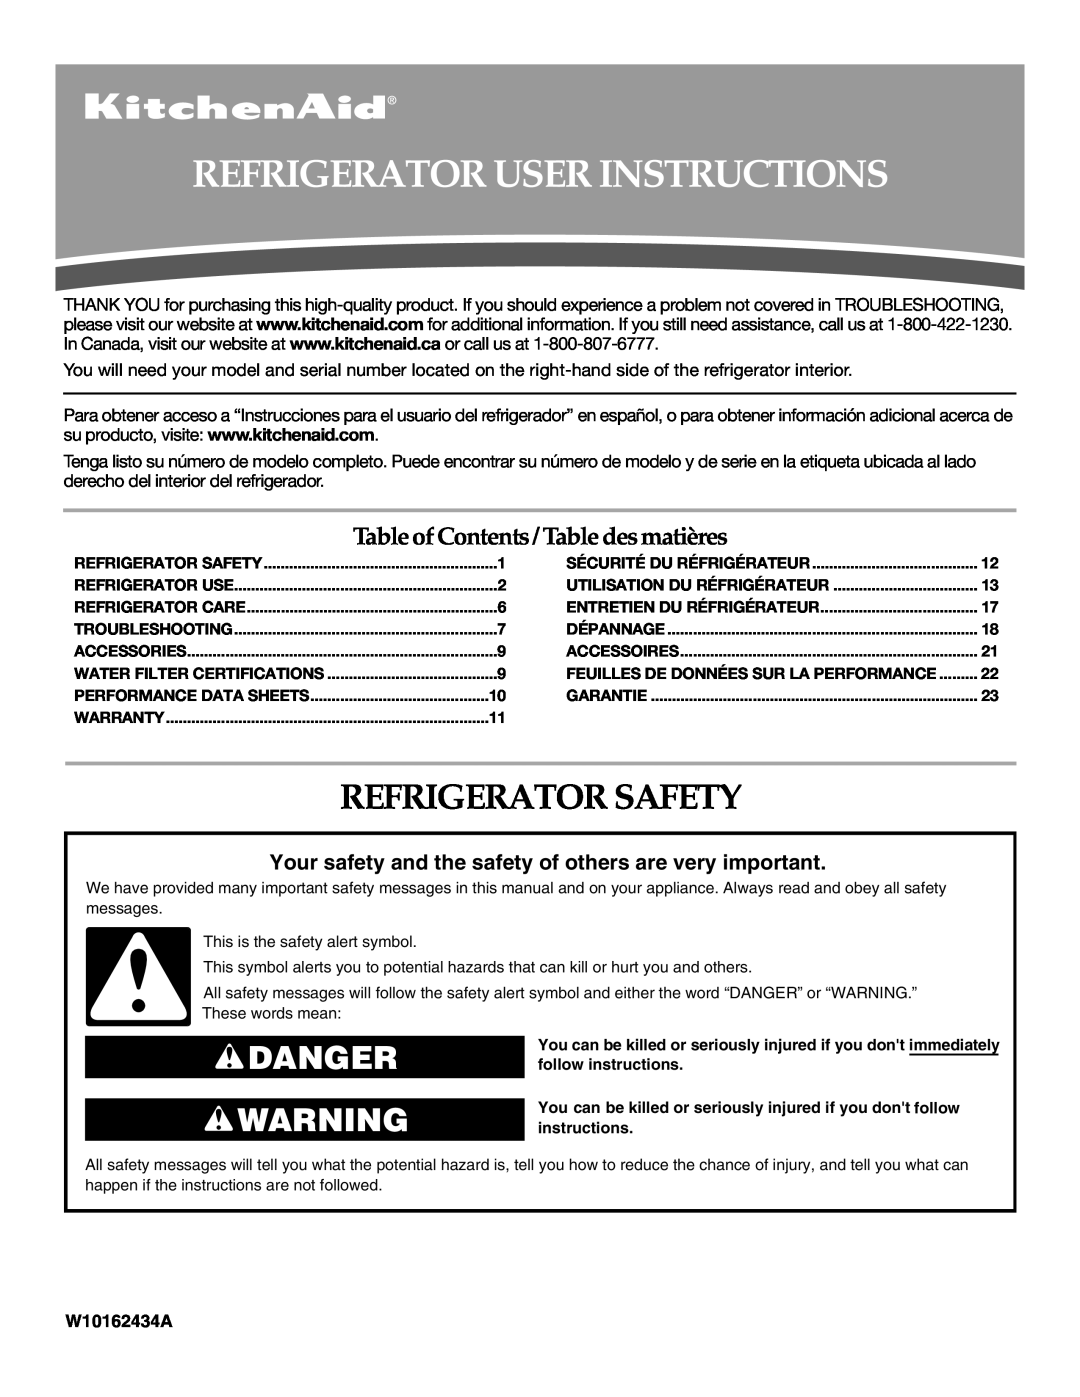 KitchenAid W10162434A warranty Refrigerator User Instructions, Refrigerator Safety, Danger 